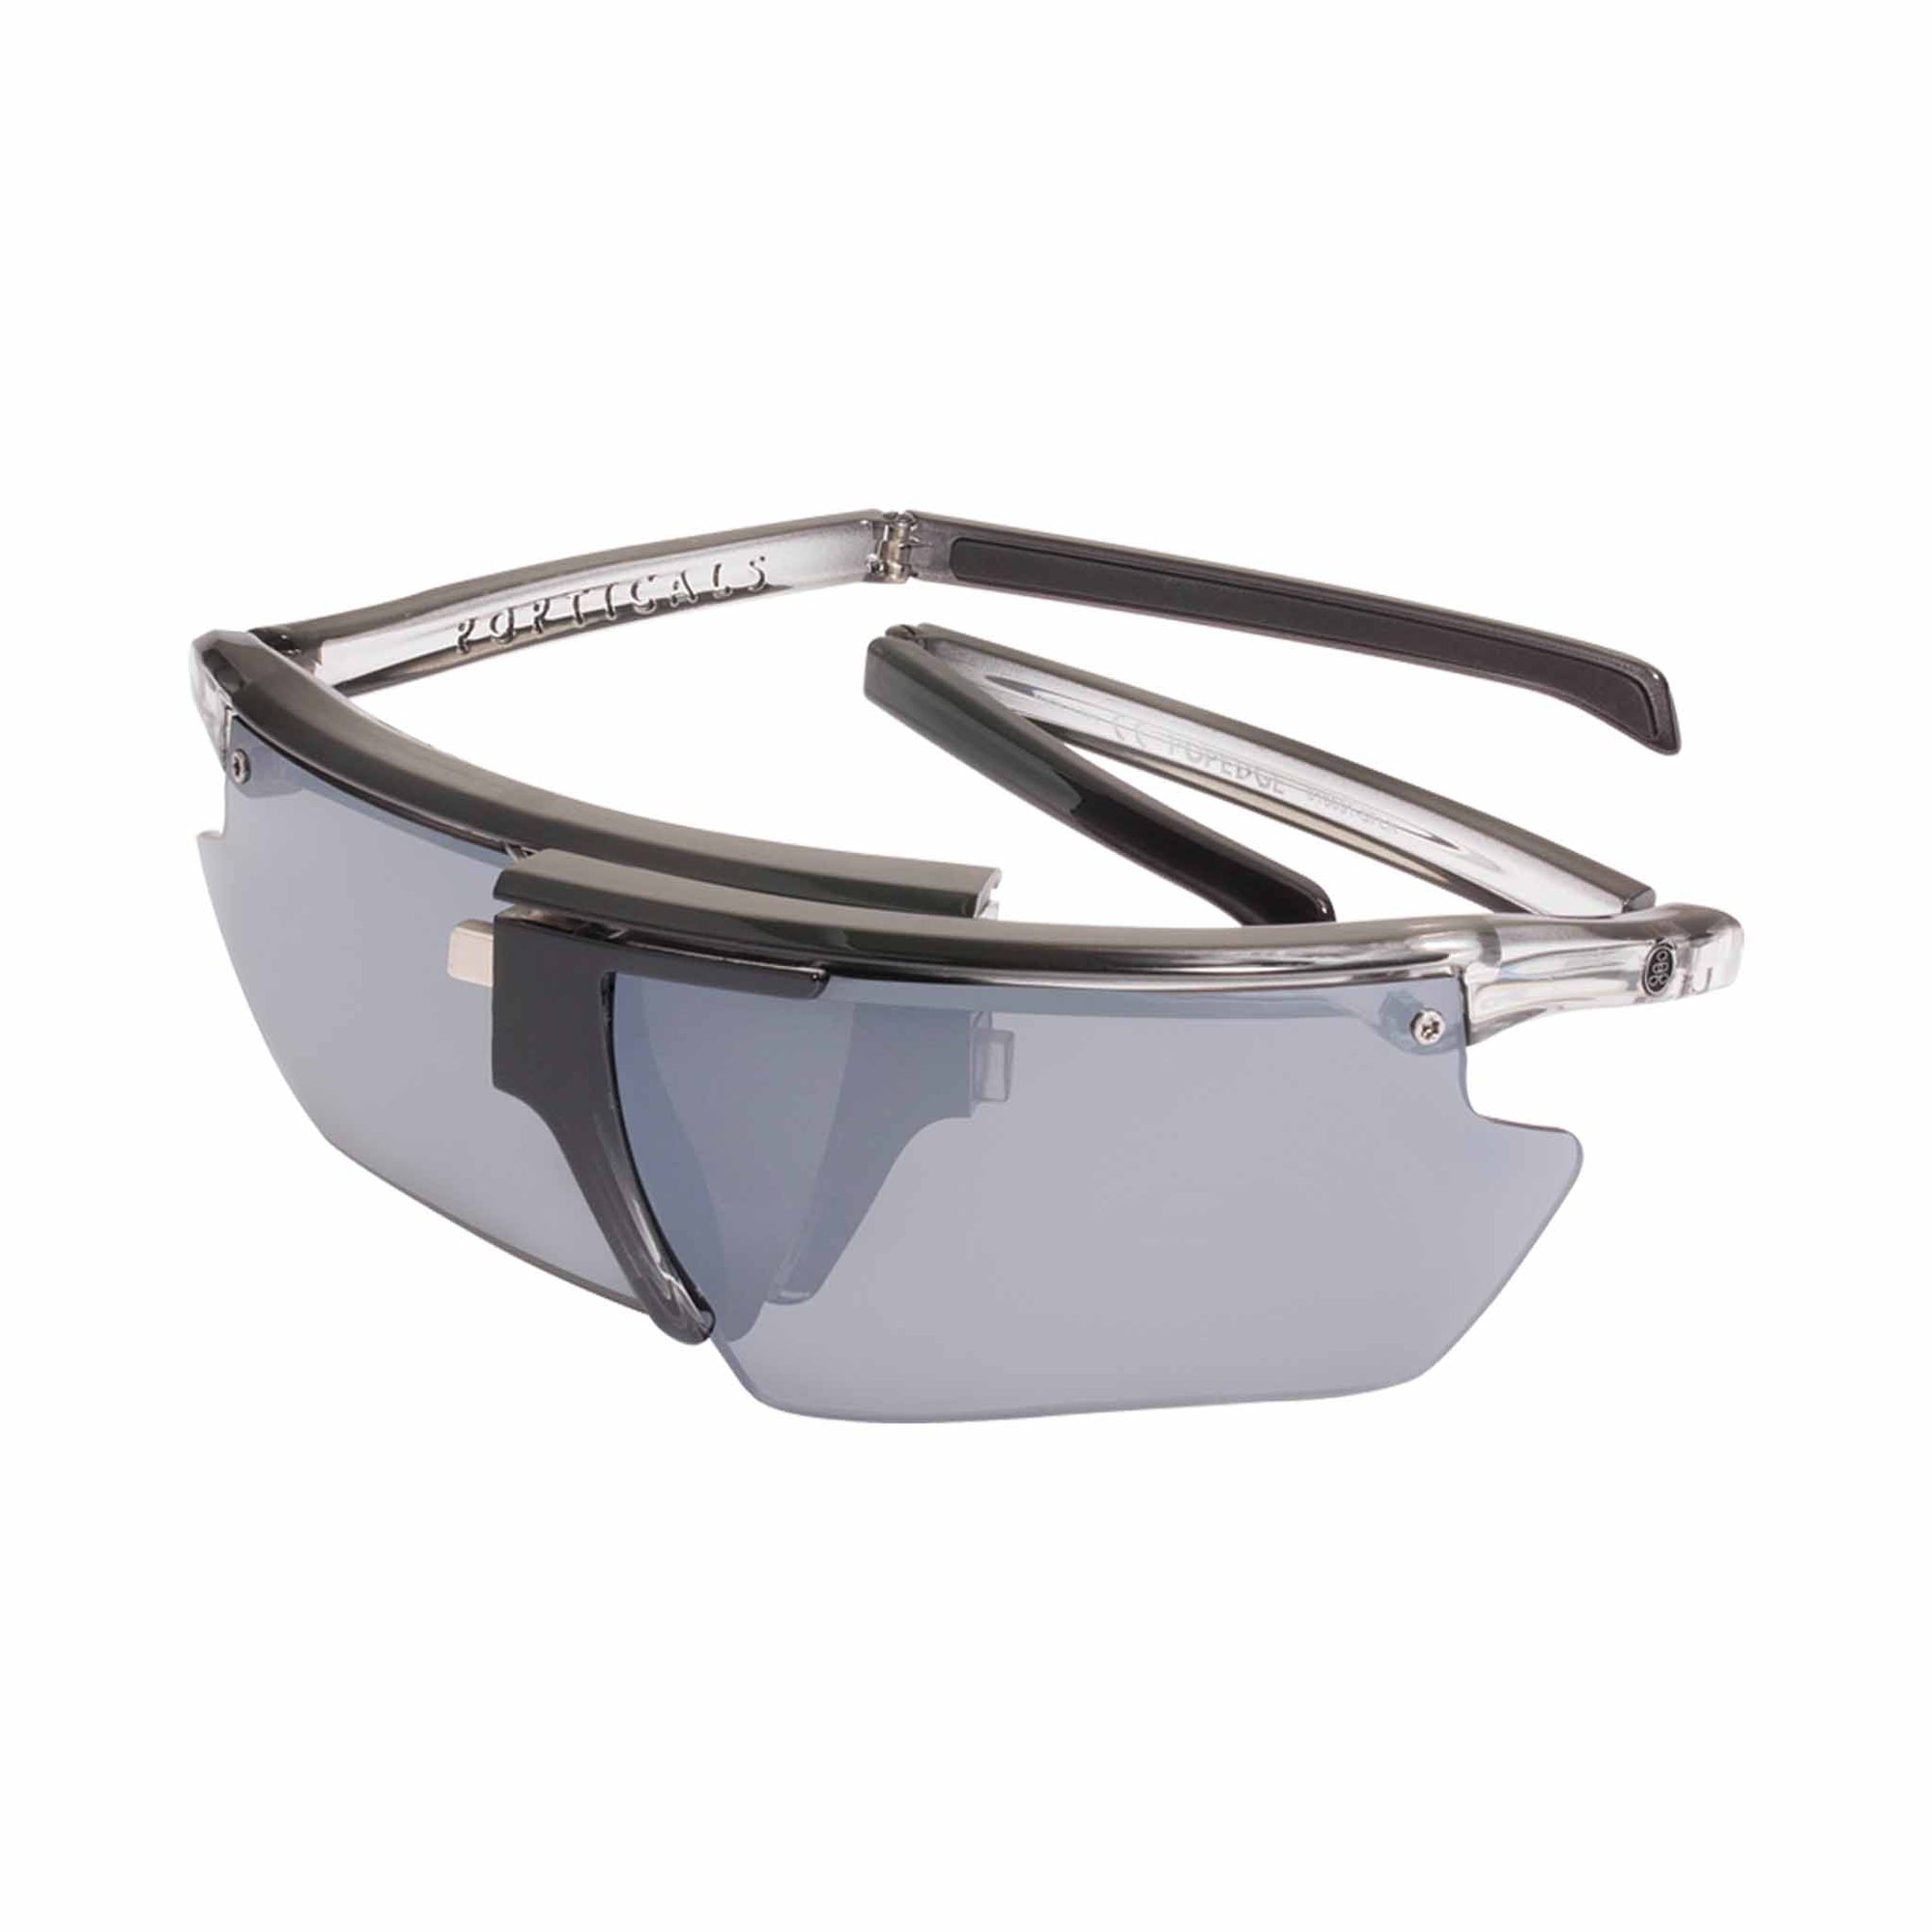 Popticals, Premium Compact Sunglasses, PopEdge, 010091-SFLN, Polarized Sunglasses, Gloss Smoke Frame, Gray Lenses with Silver Mirror Finish, Spider View